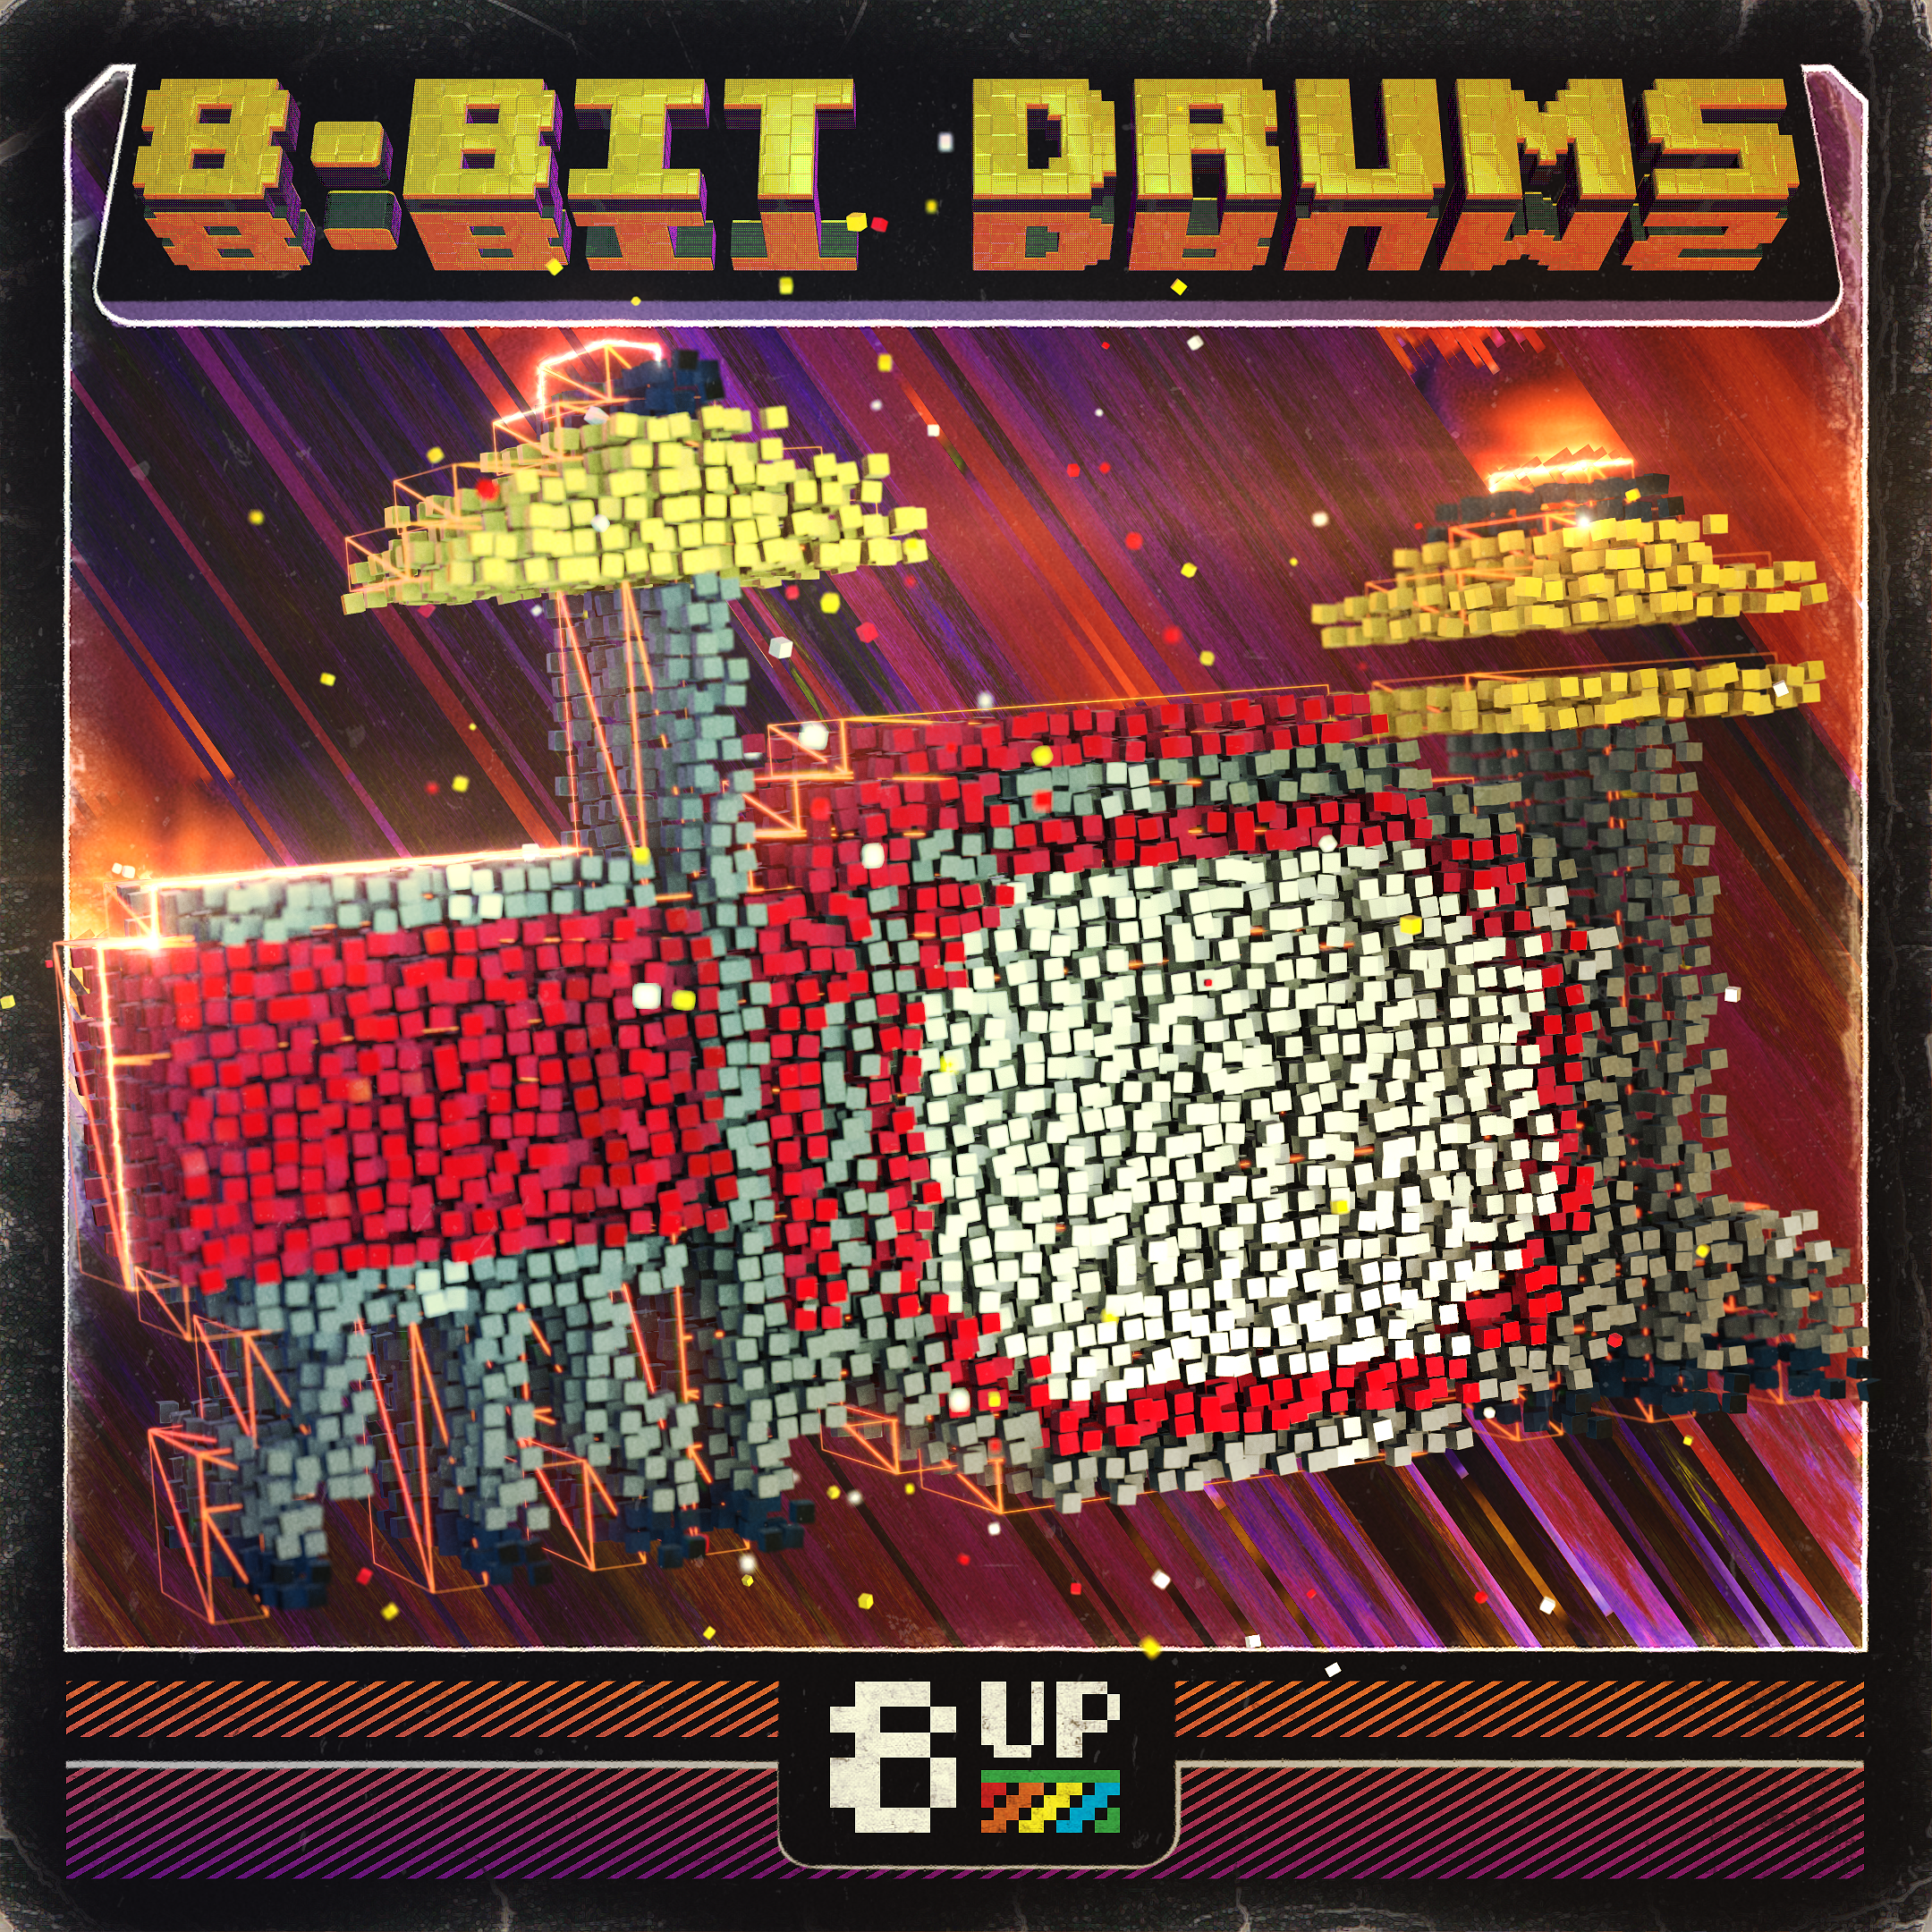 8-Bit Drums Packshot by 8UP